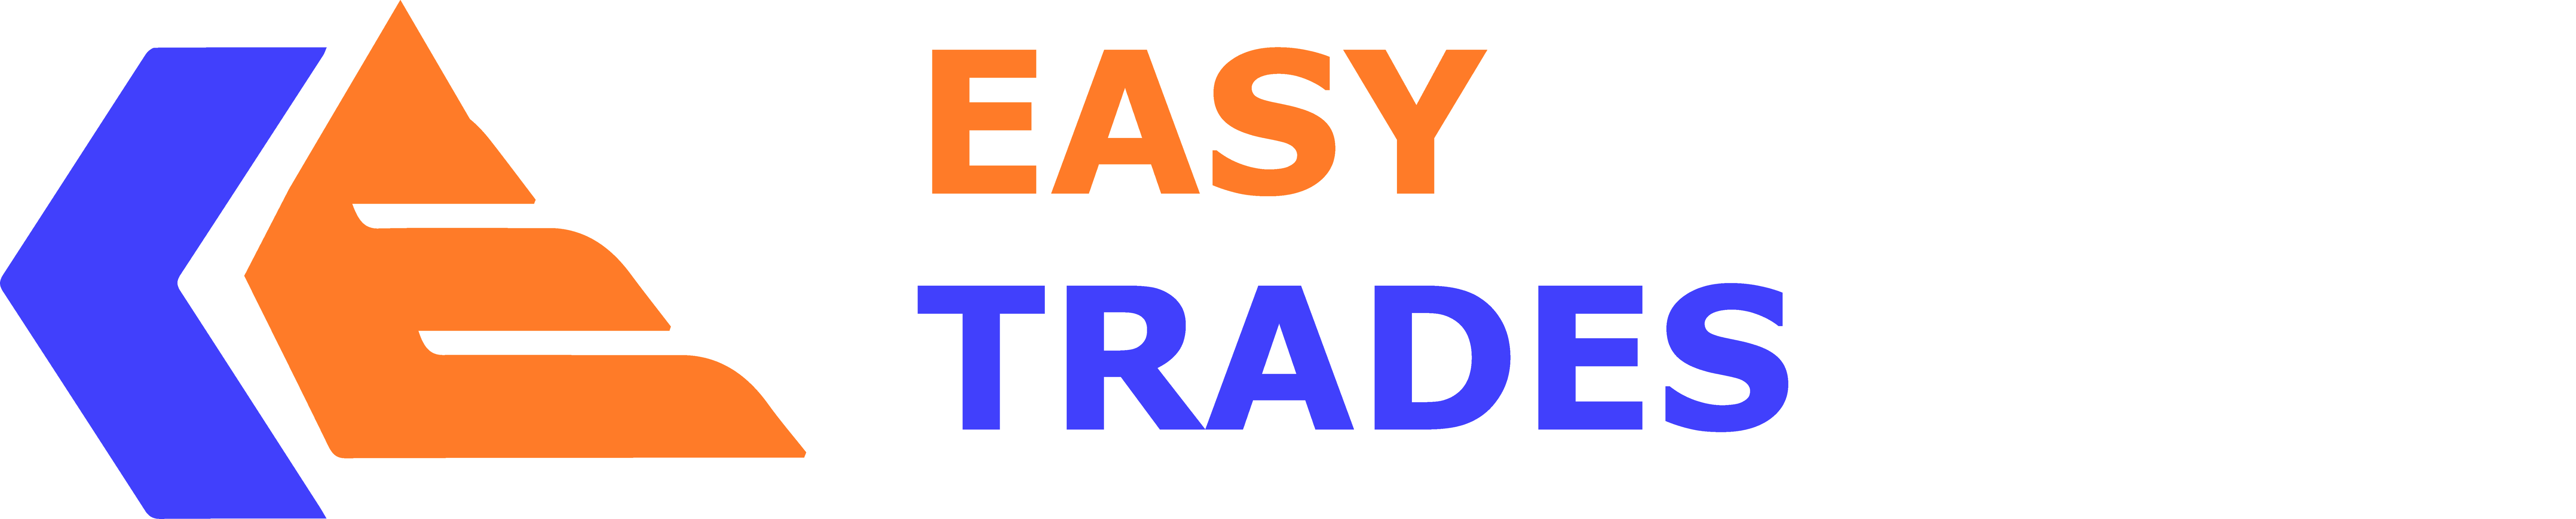 Easy Premier Trades Forex Trading Provider